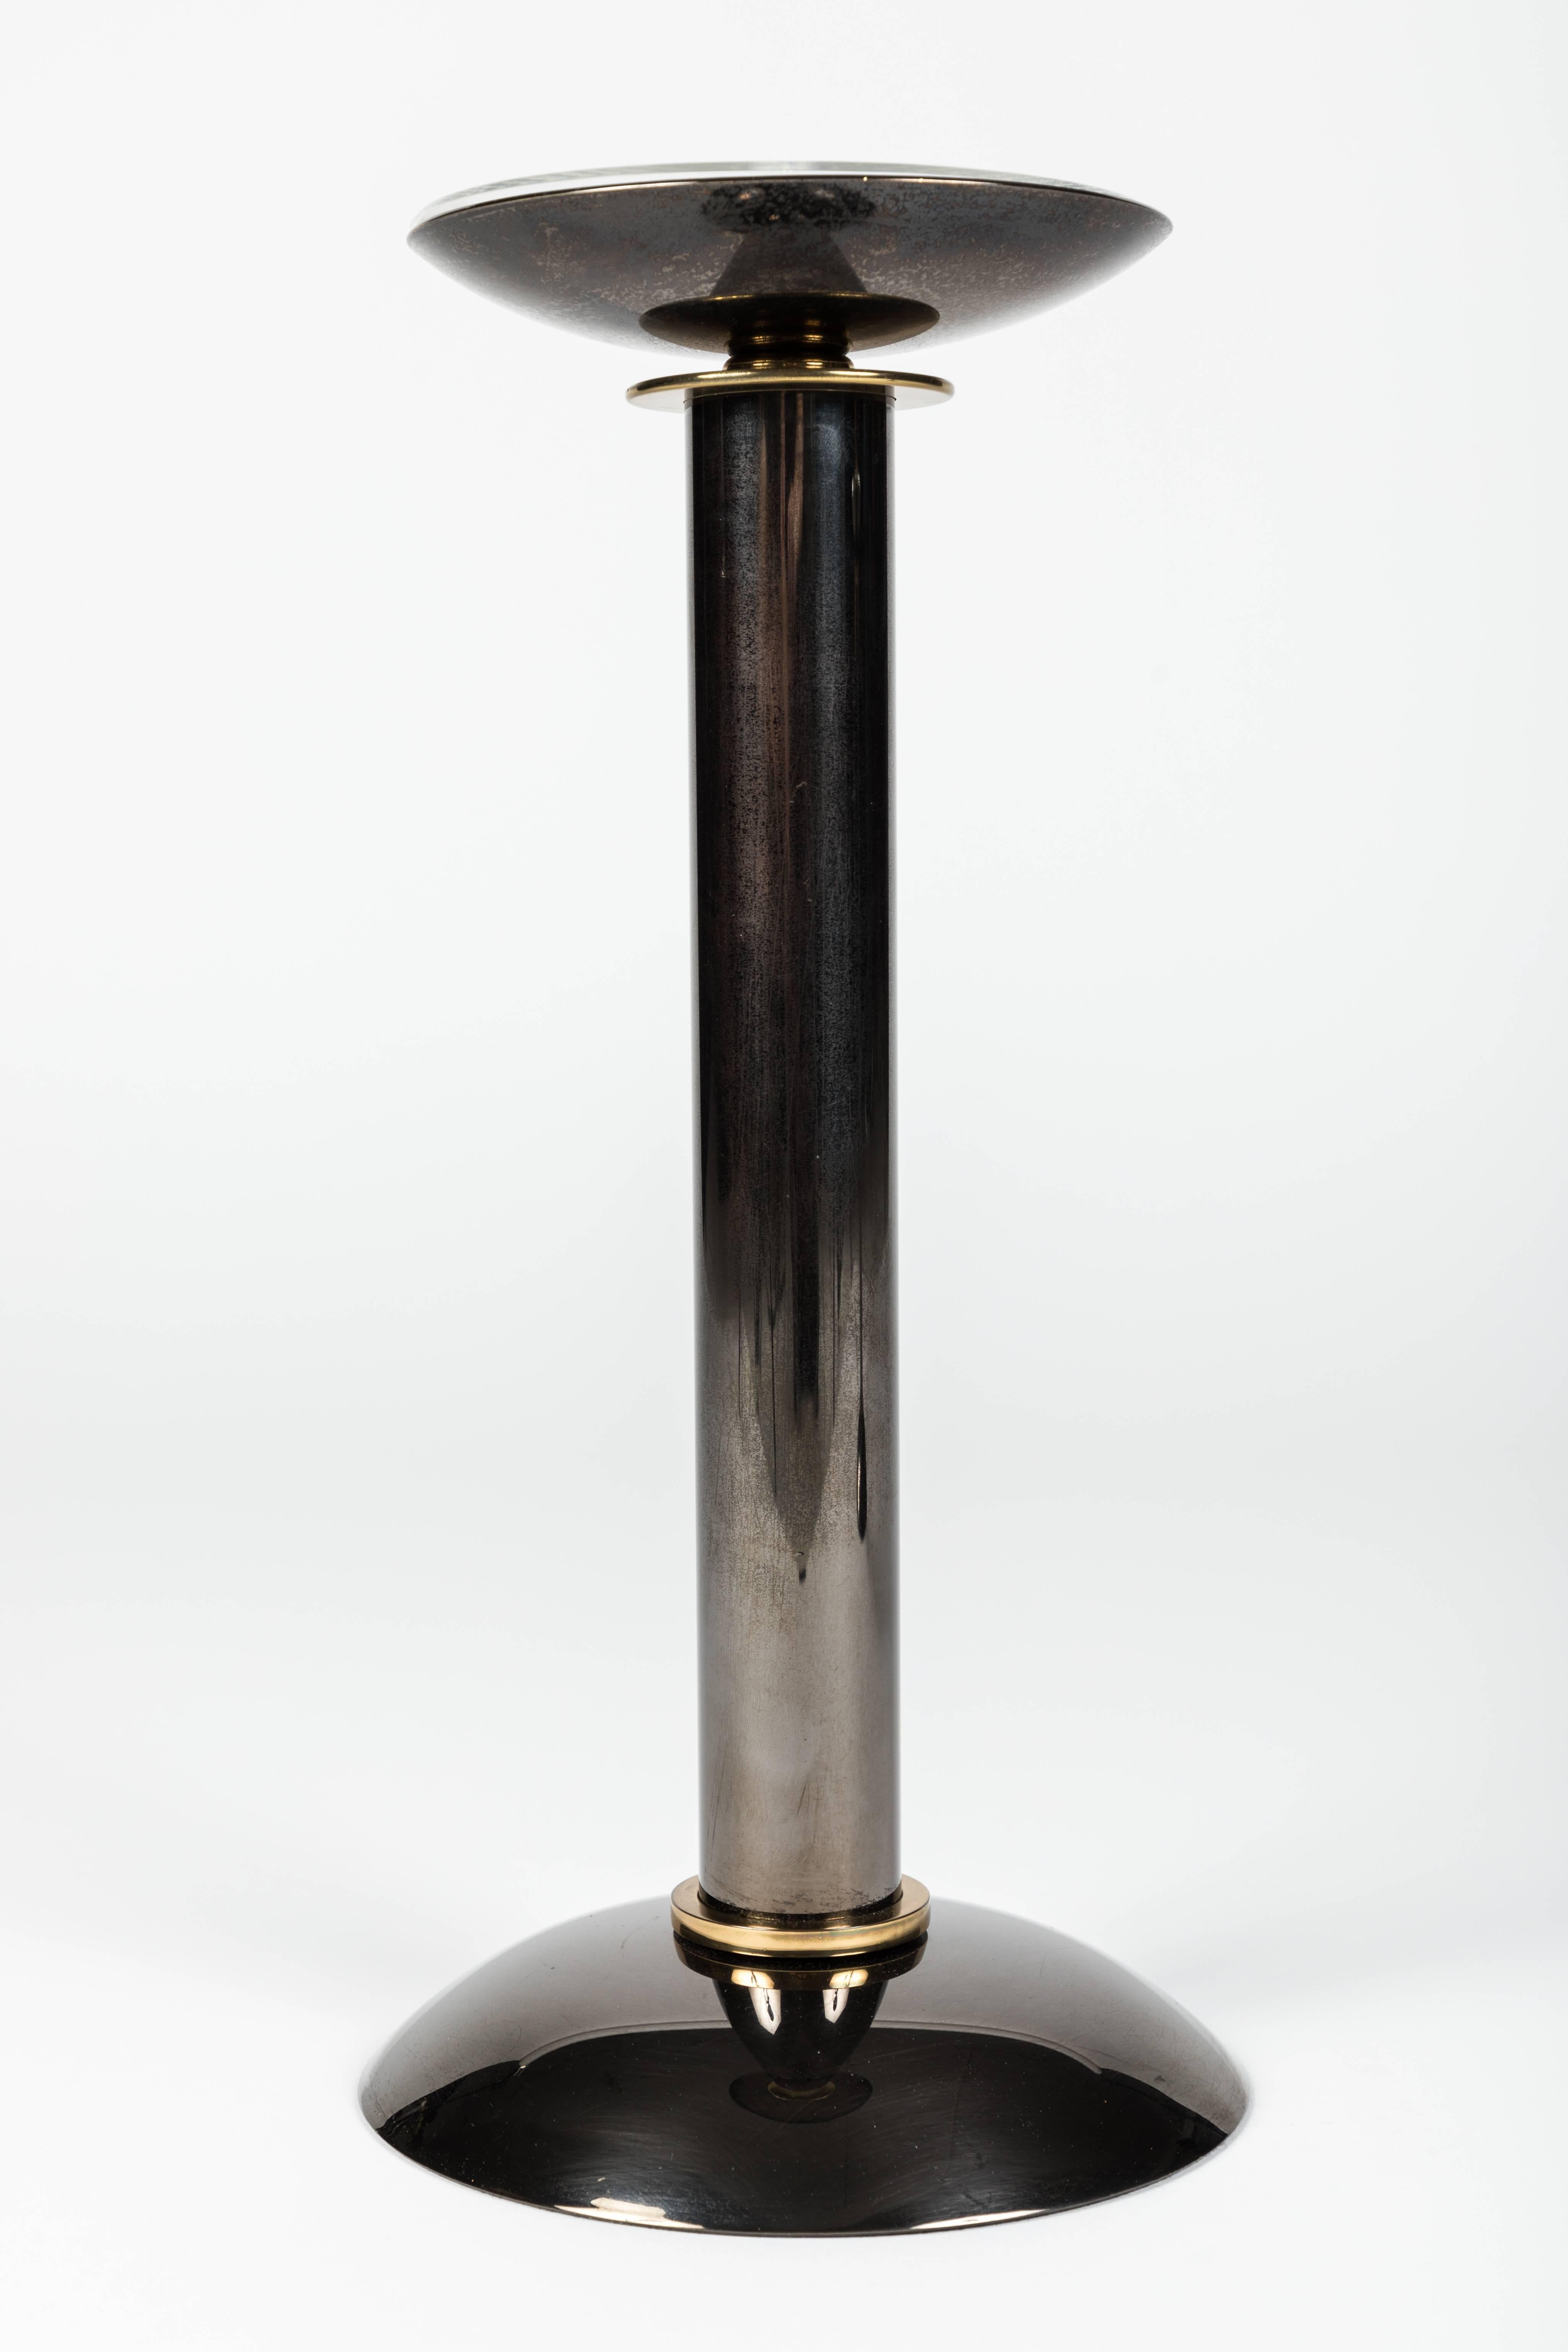 Patinated Pair of Modernist Candlesticks by Karl Springer